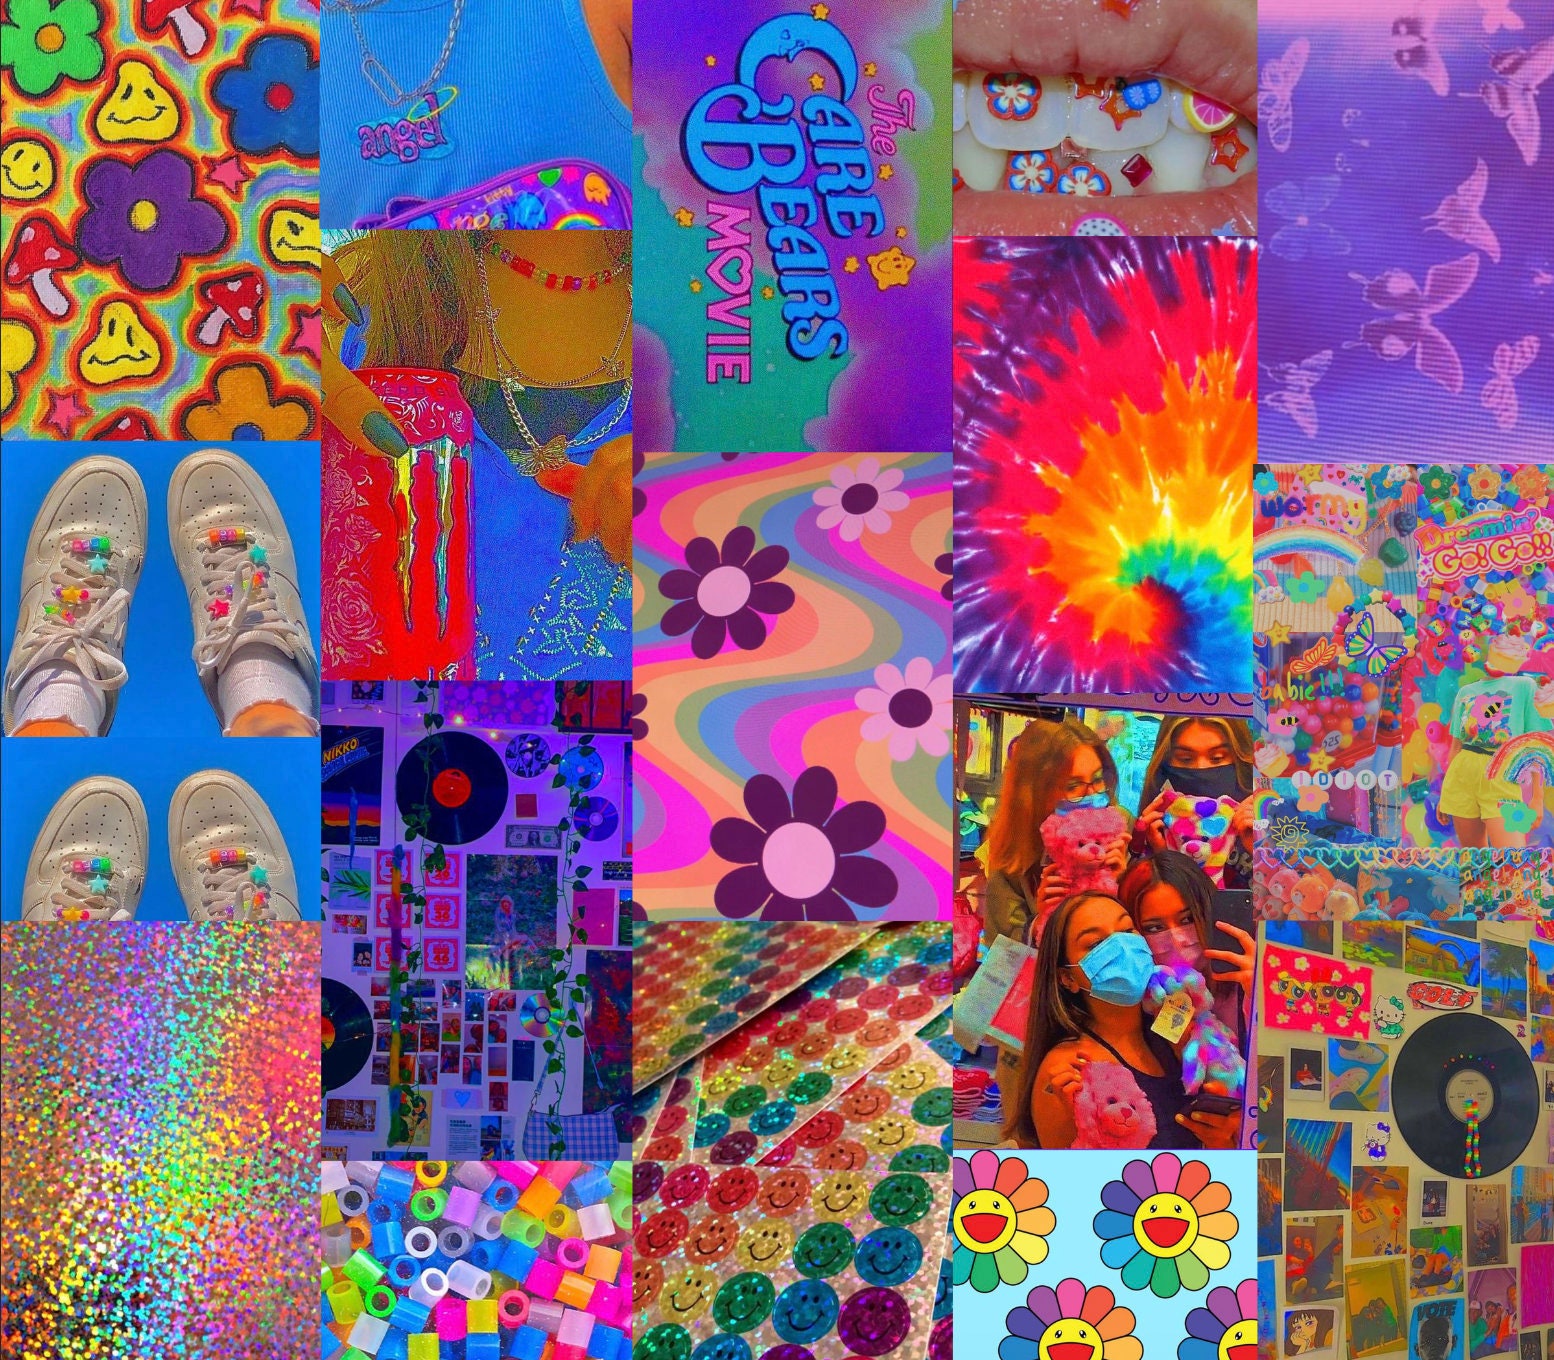 Y2k Kidcore/Indie Kid Trippy Aesthetic Wall Collage Kit | Etsy